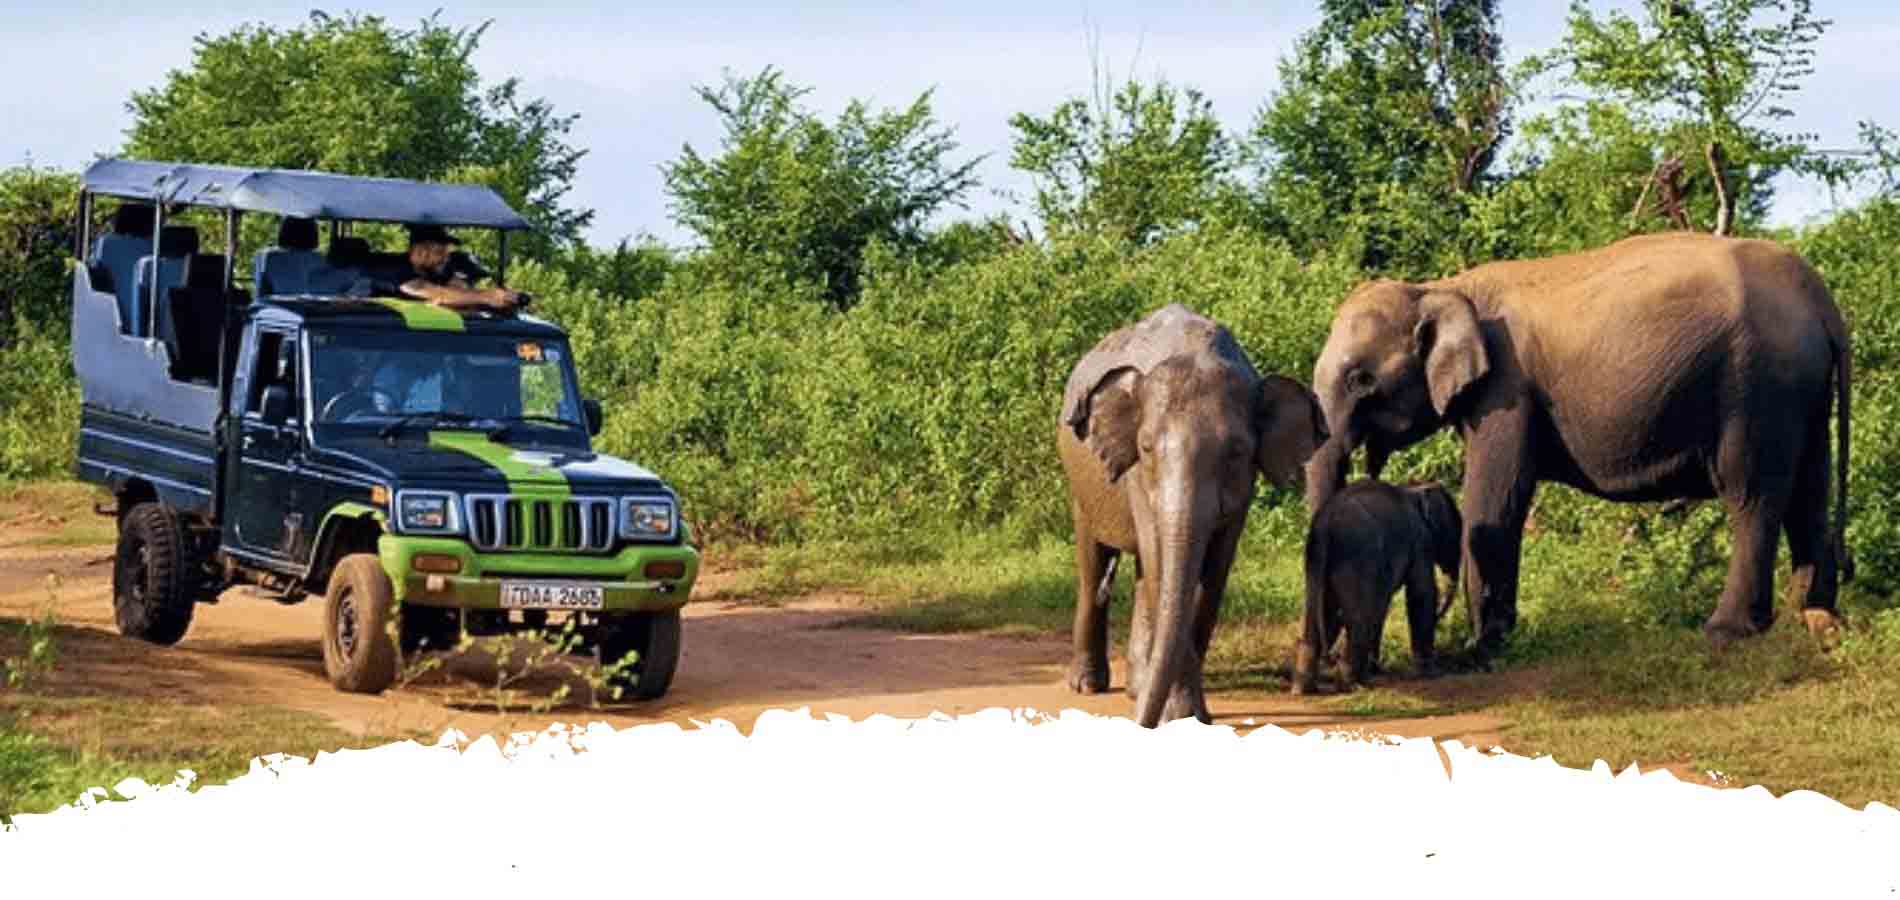 The Jeep safari in Sri Lanka